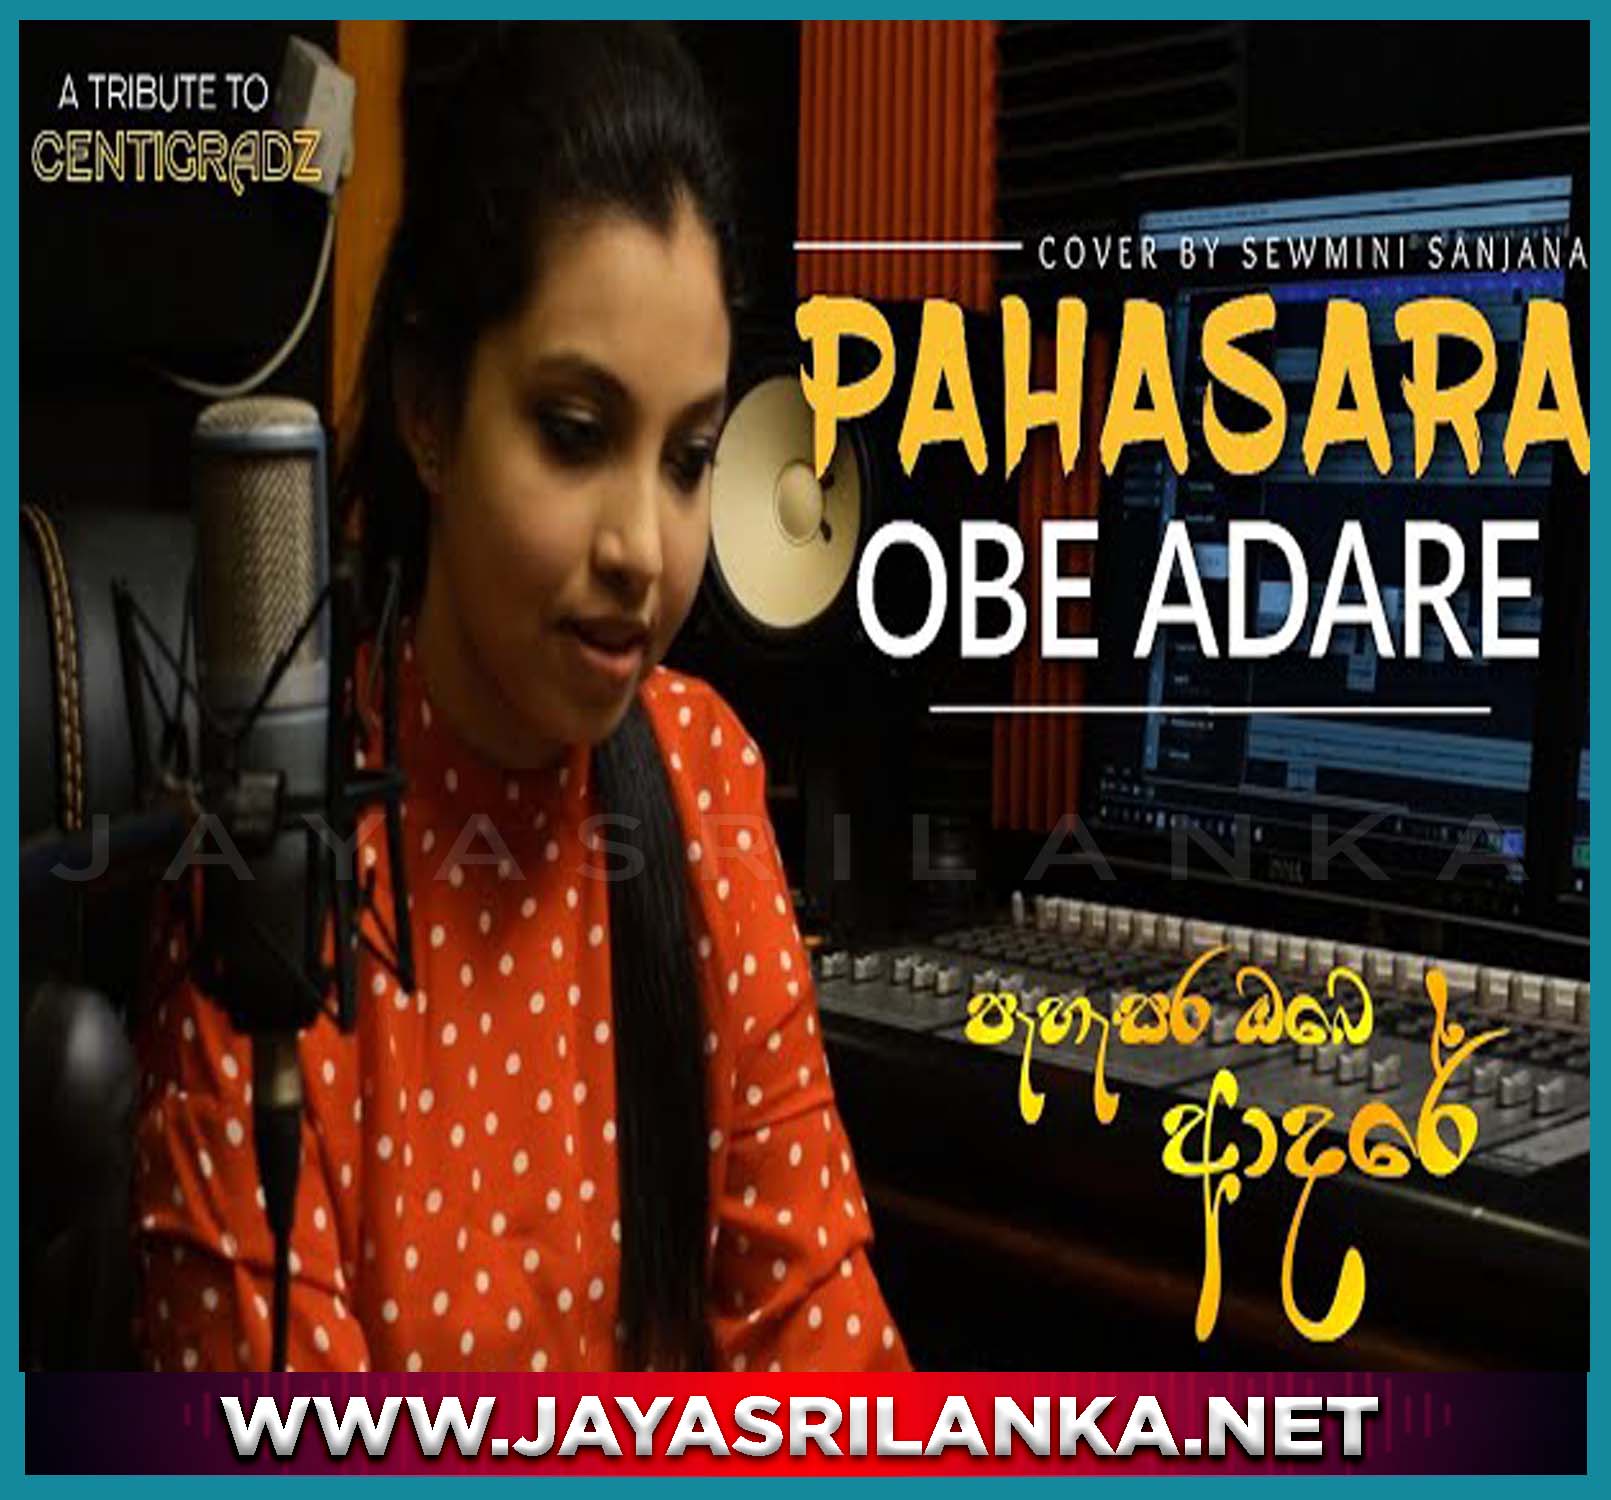 Pahasara Obe Adare Cover